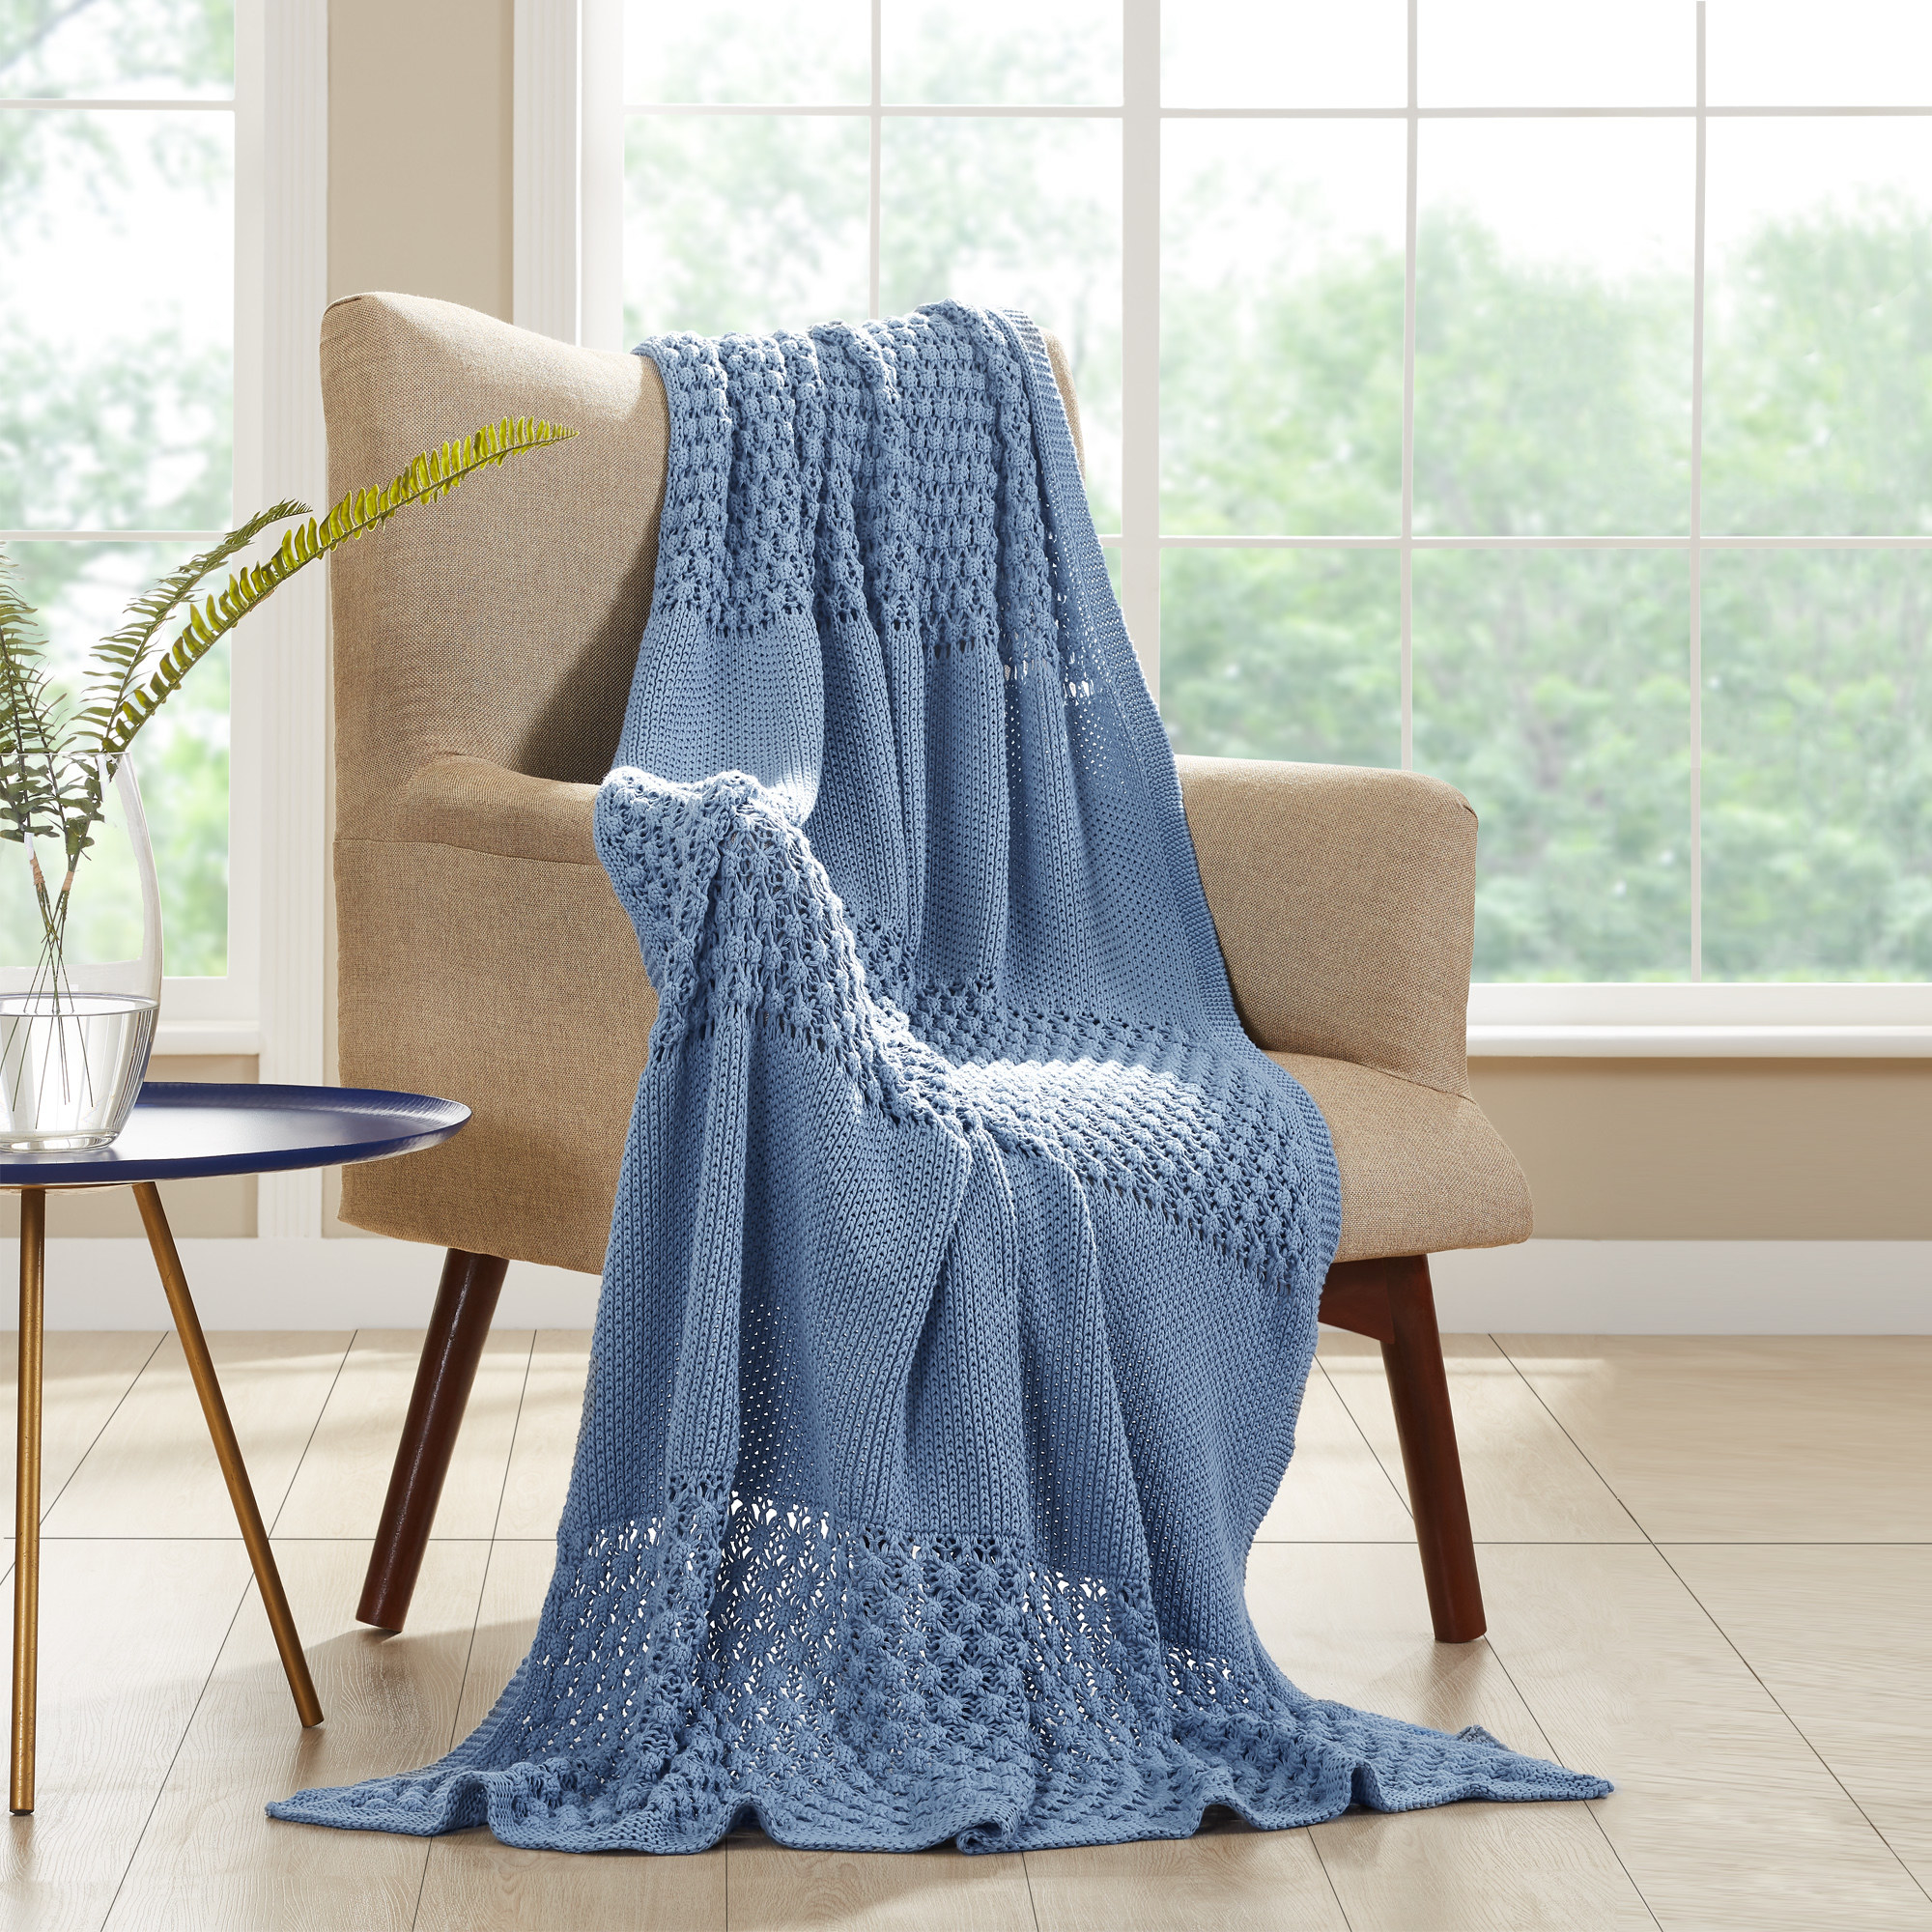 a blue throw blanket over a chair